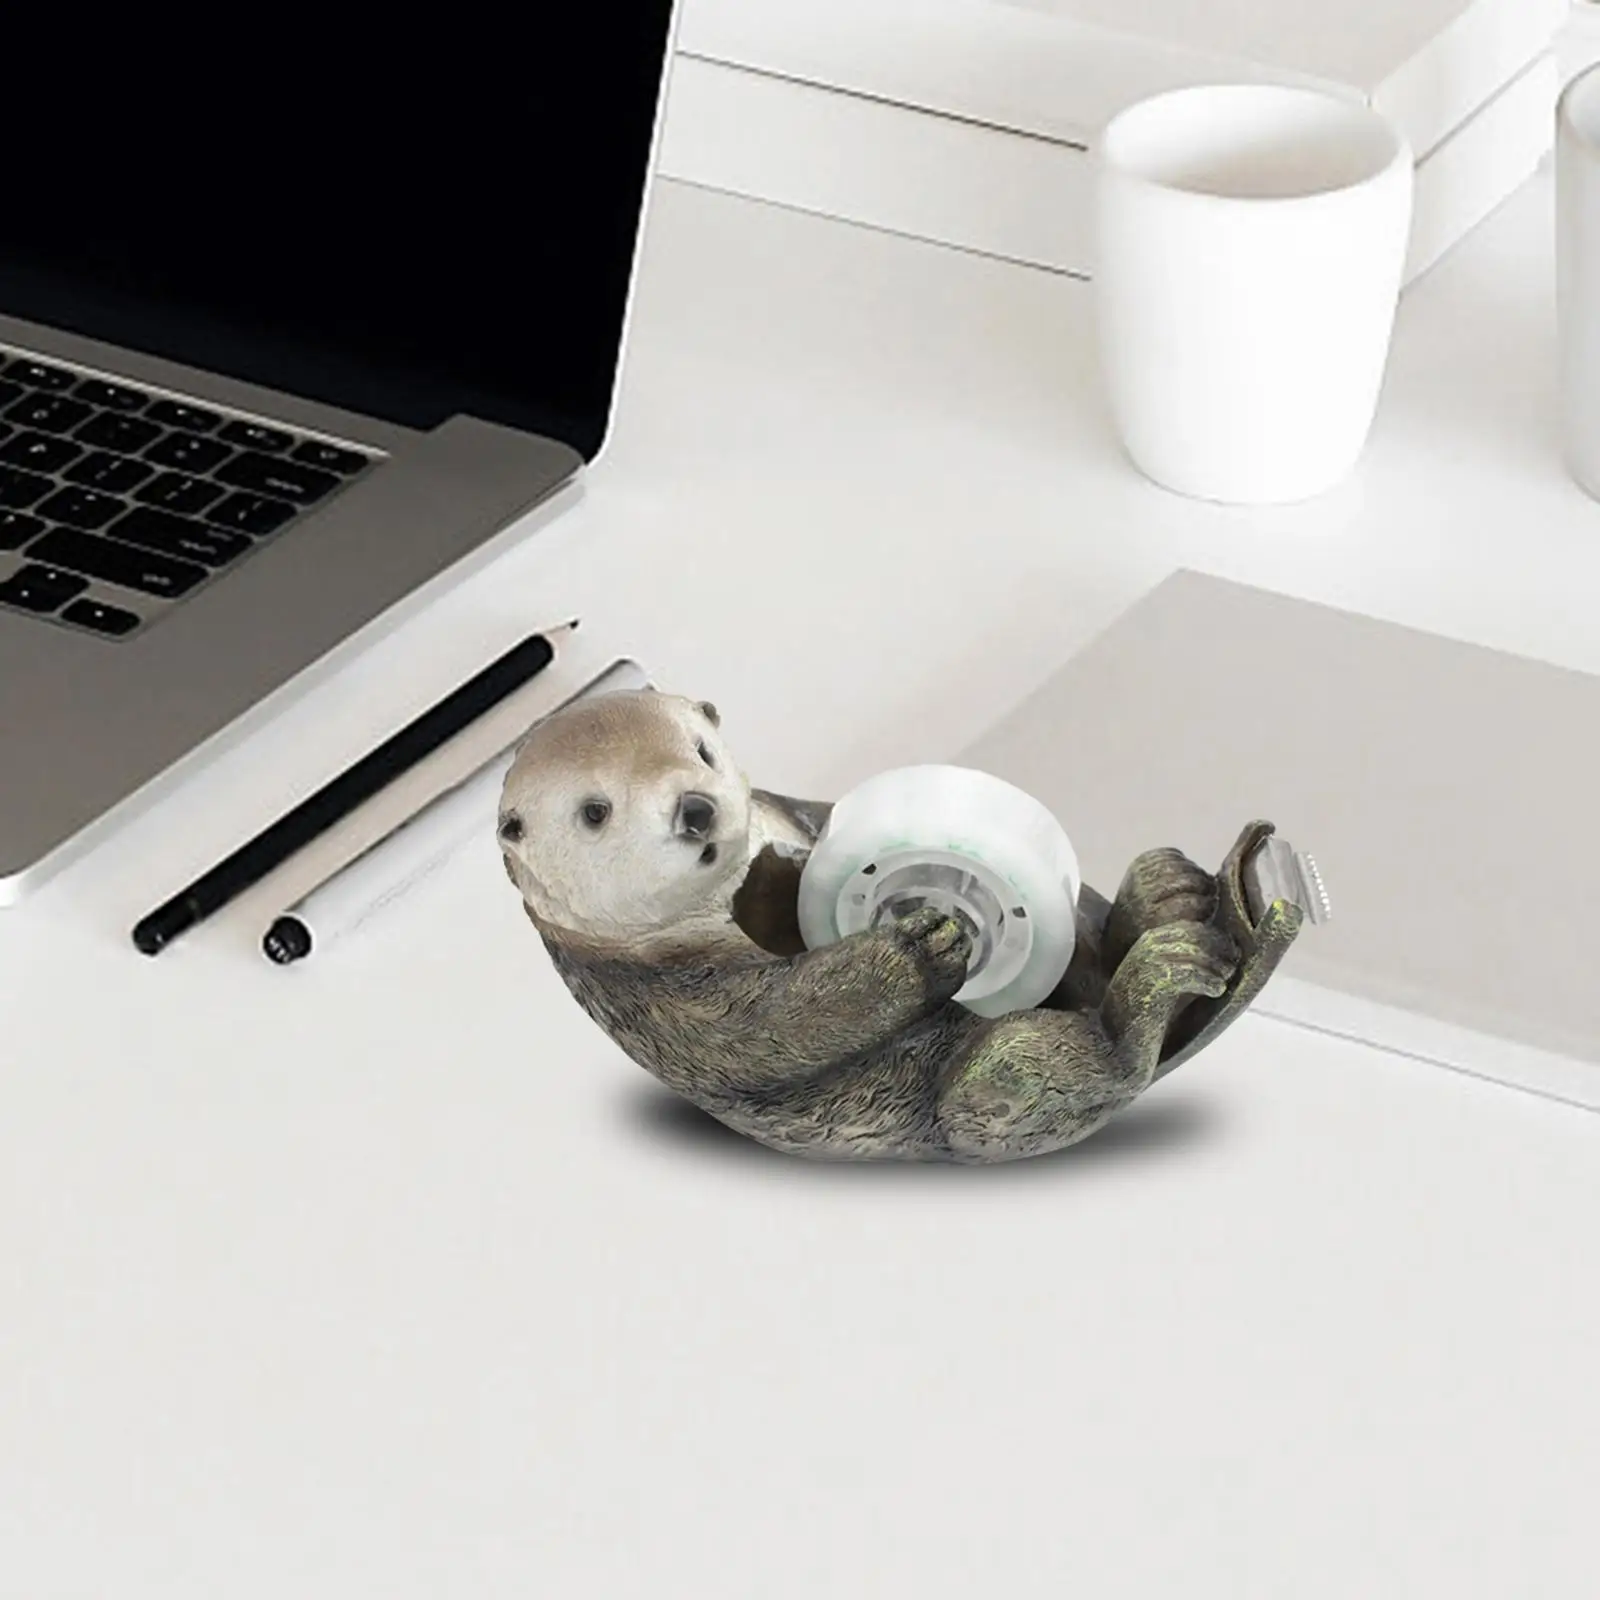 Otter Tape Dispenser Decor Cute Desk Accessory Portable Animal Figurine Roll Holder for Home Scrapbooking Desktop Office Friends